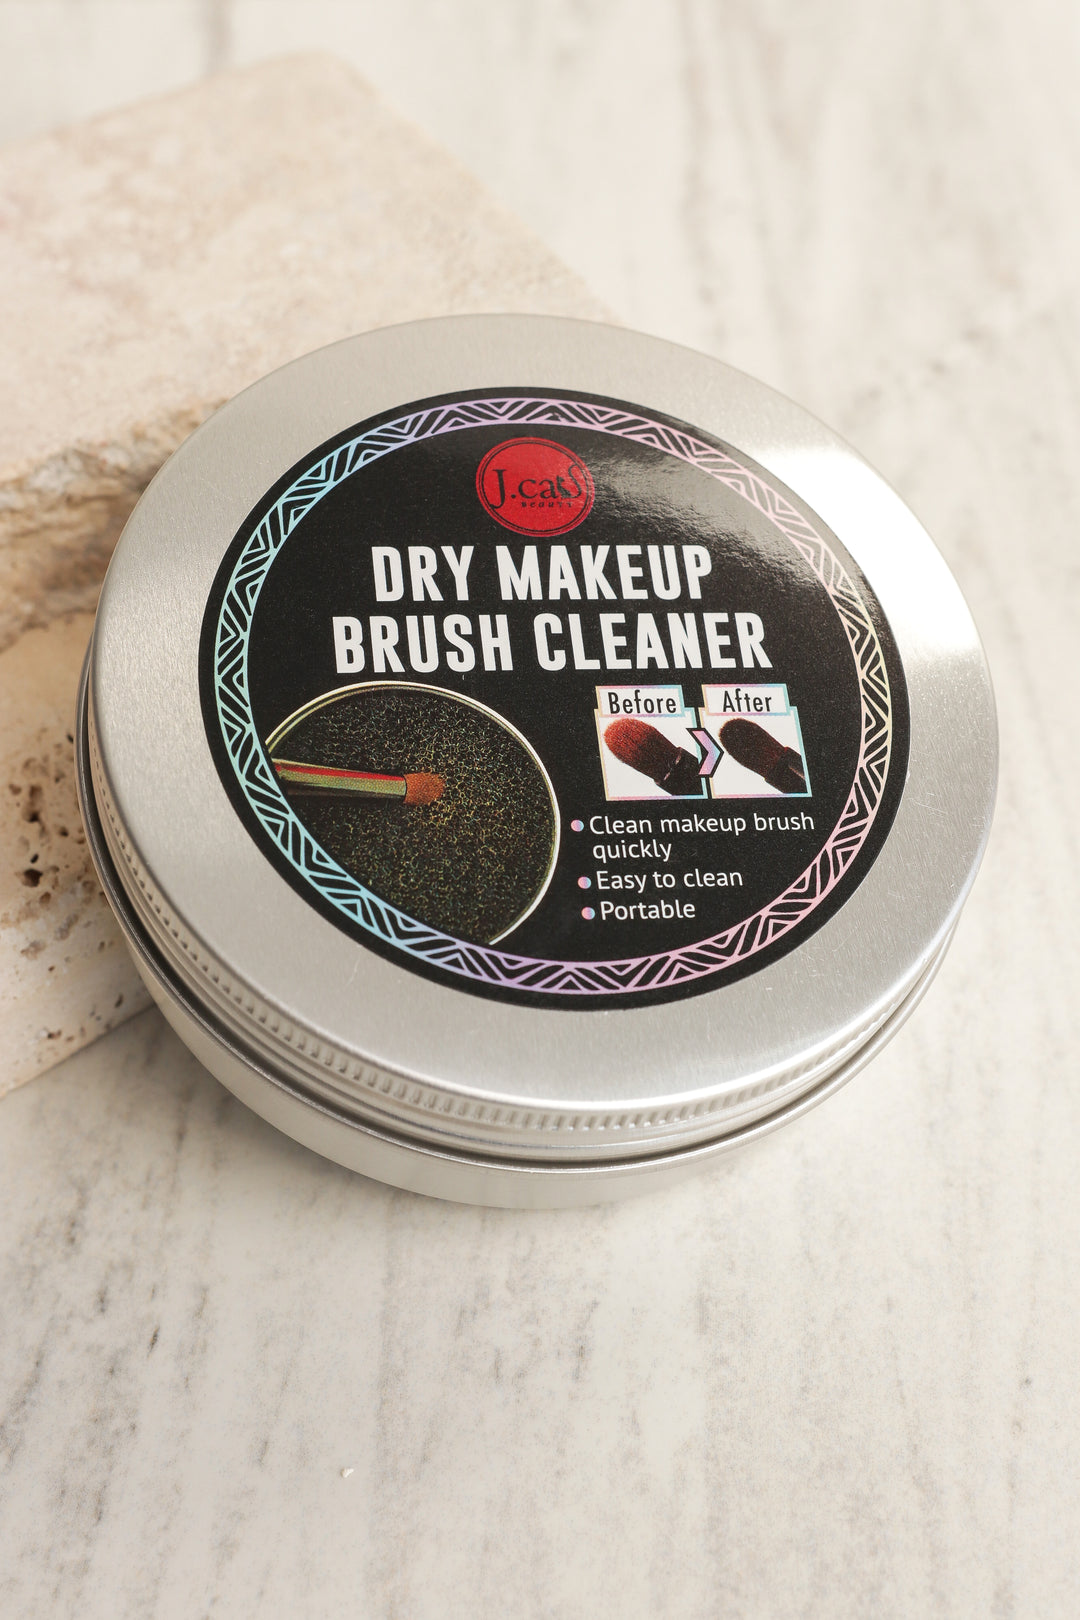 J Cat Dry Make Up Brush Cleanser - Limpiador en Seco para Brochas